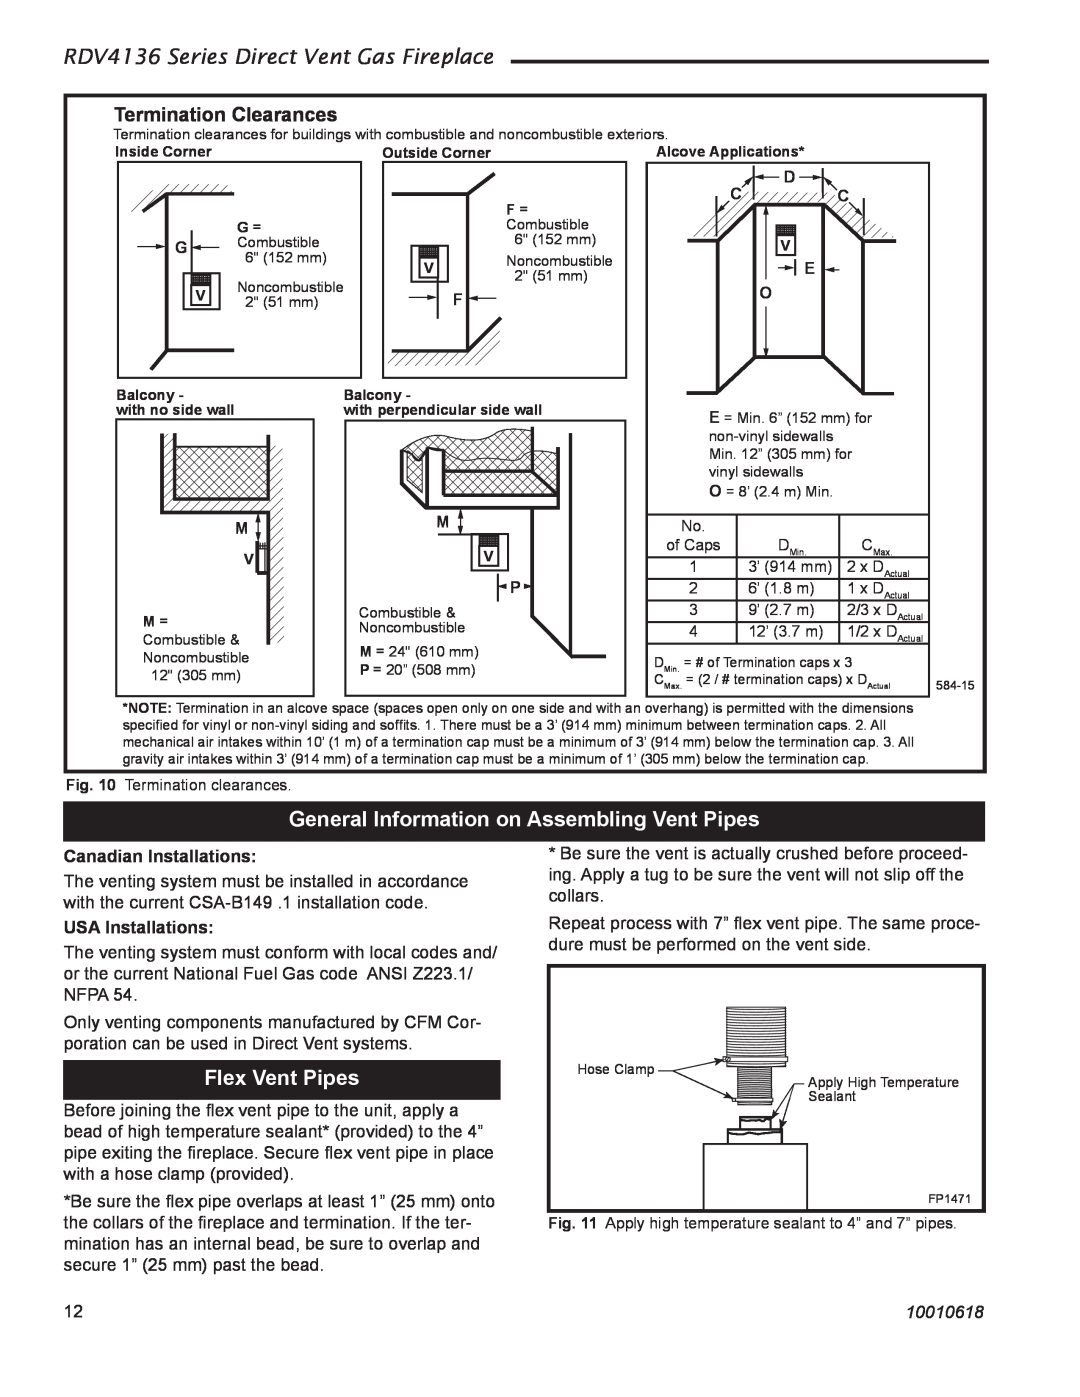 Majestic Appliances RDV4136 General Information on Assembling Vent Pipes, Flex Vent Pipes, Termination Clearances 